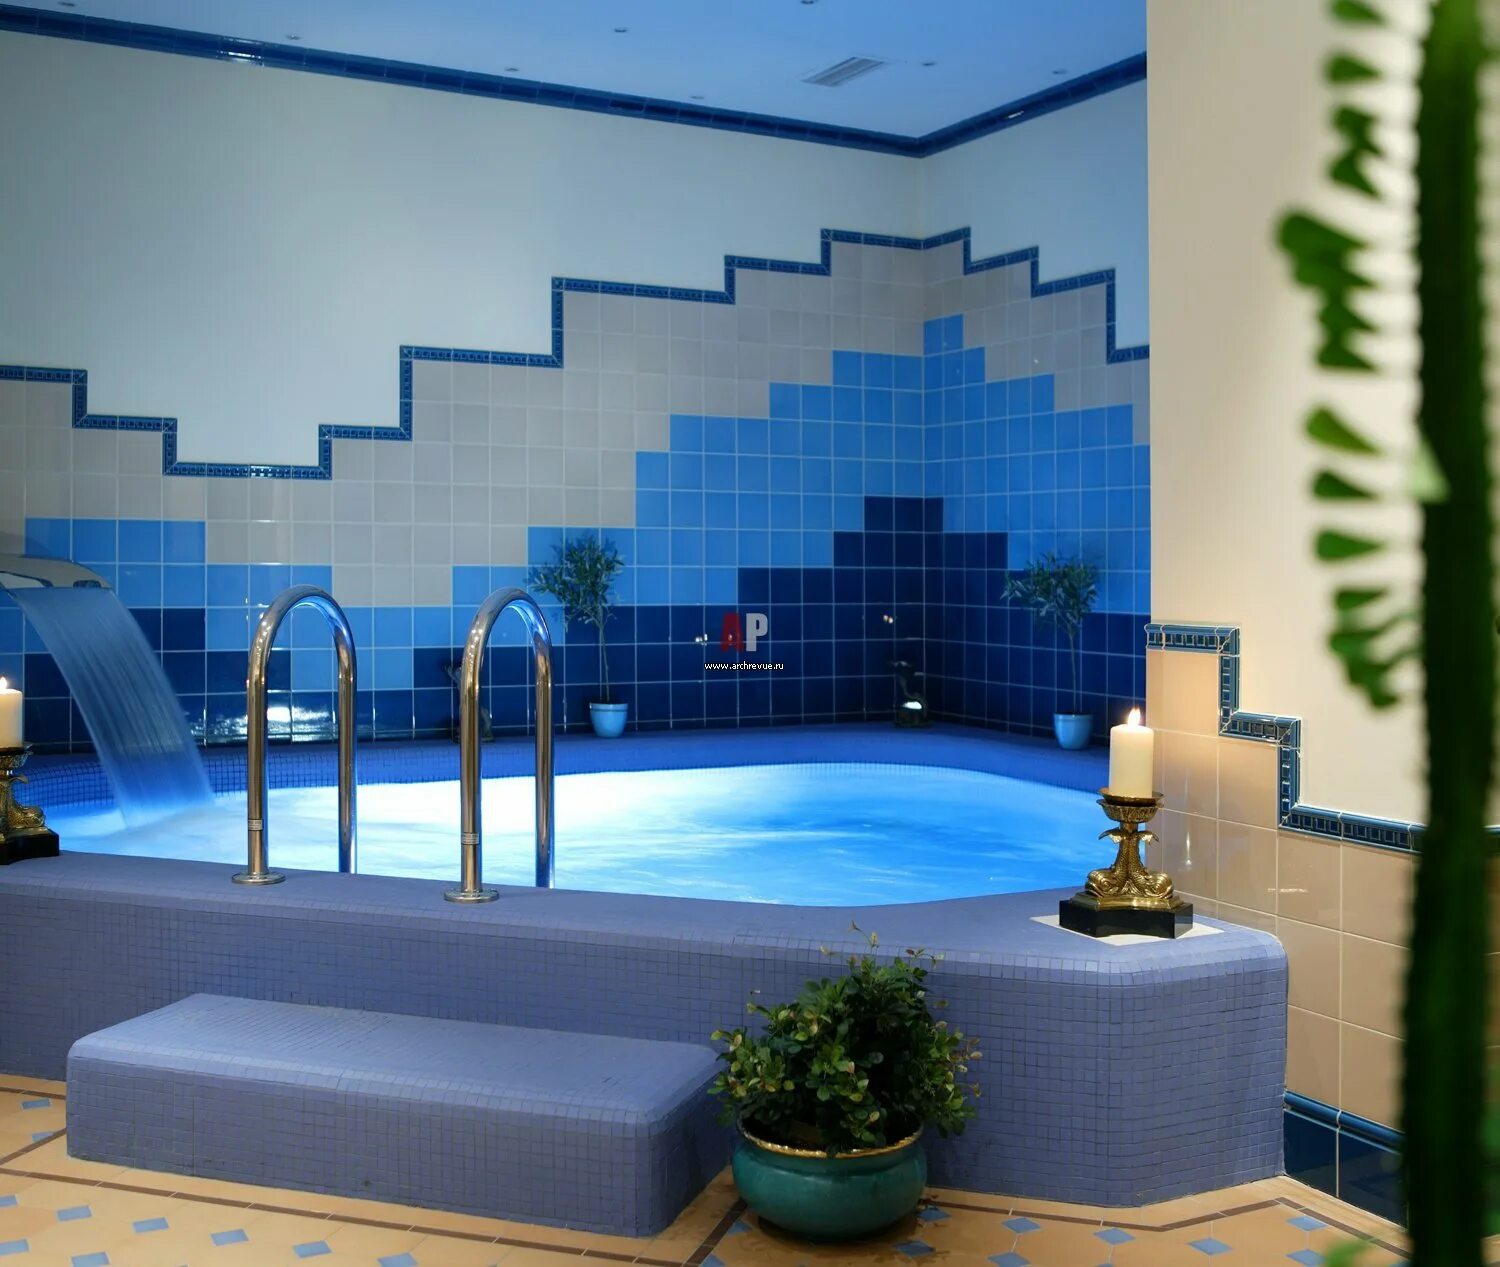 Отделка бассейна. Небольшой бассейн в доме. Отделка бассейнов в частном доме. Отделка стен бассейна. Showers pool